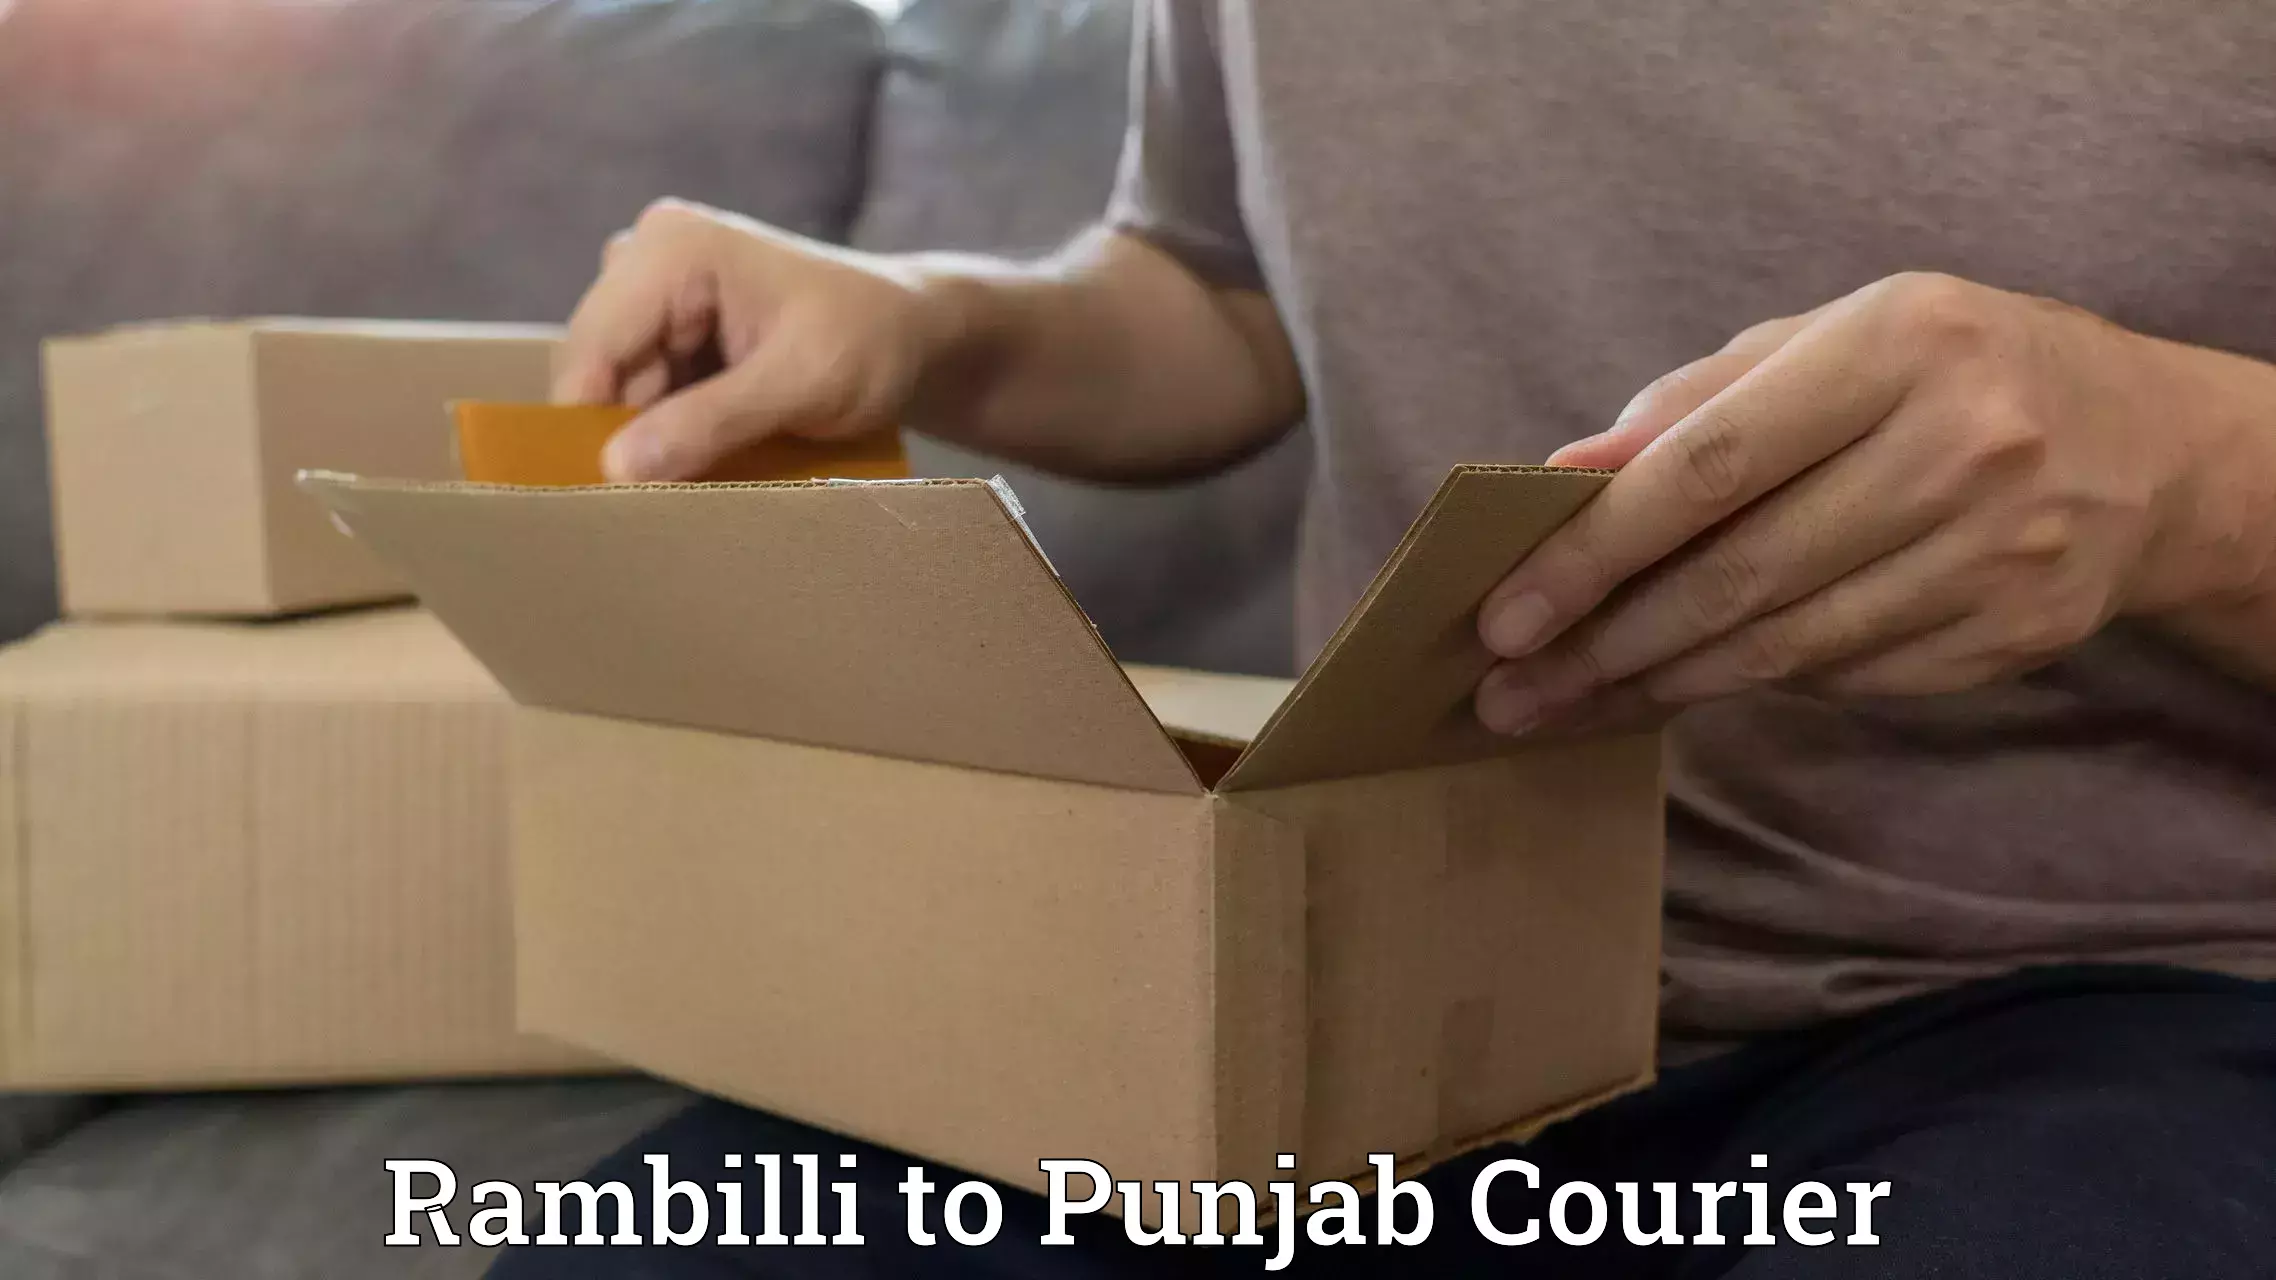 Courier insurance Rambilli to Punjab